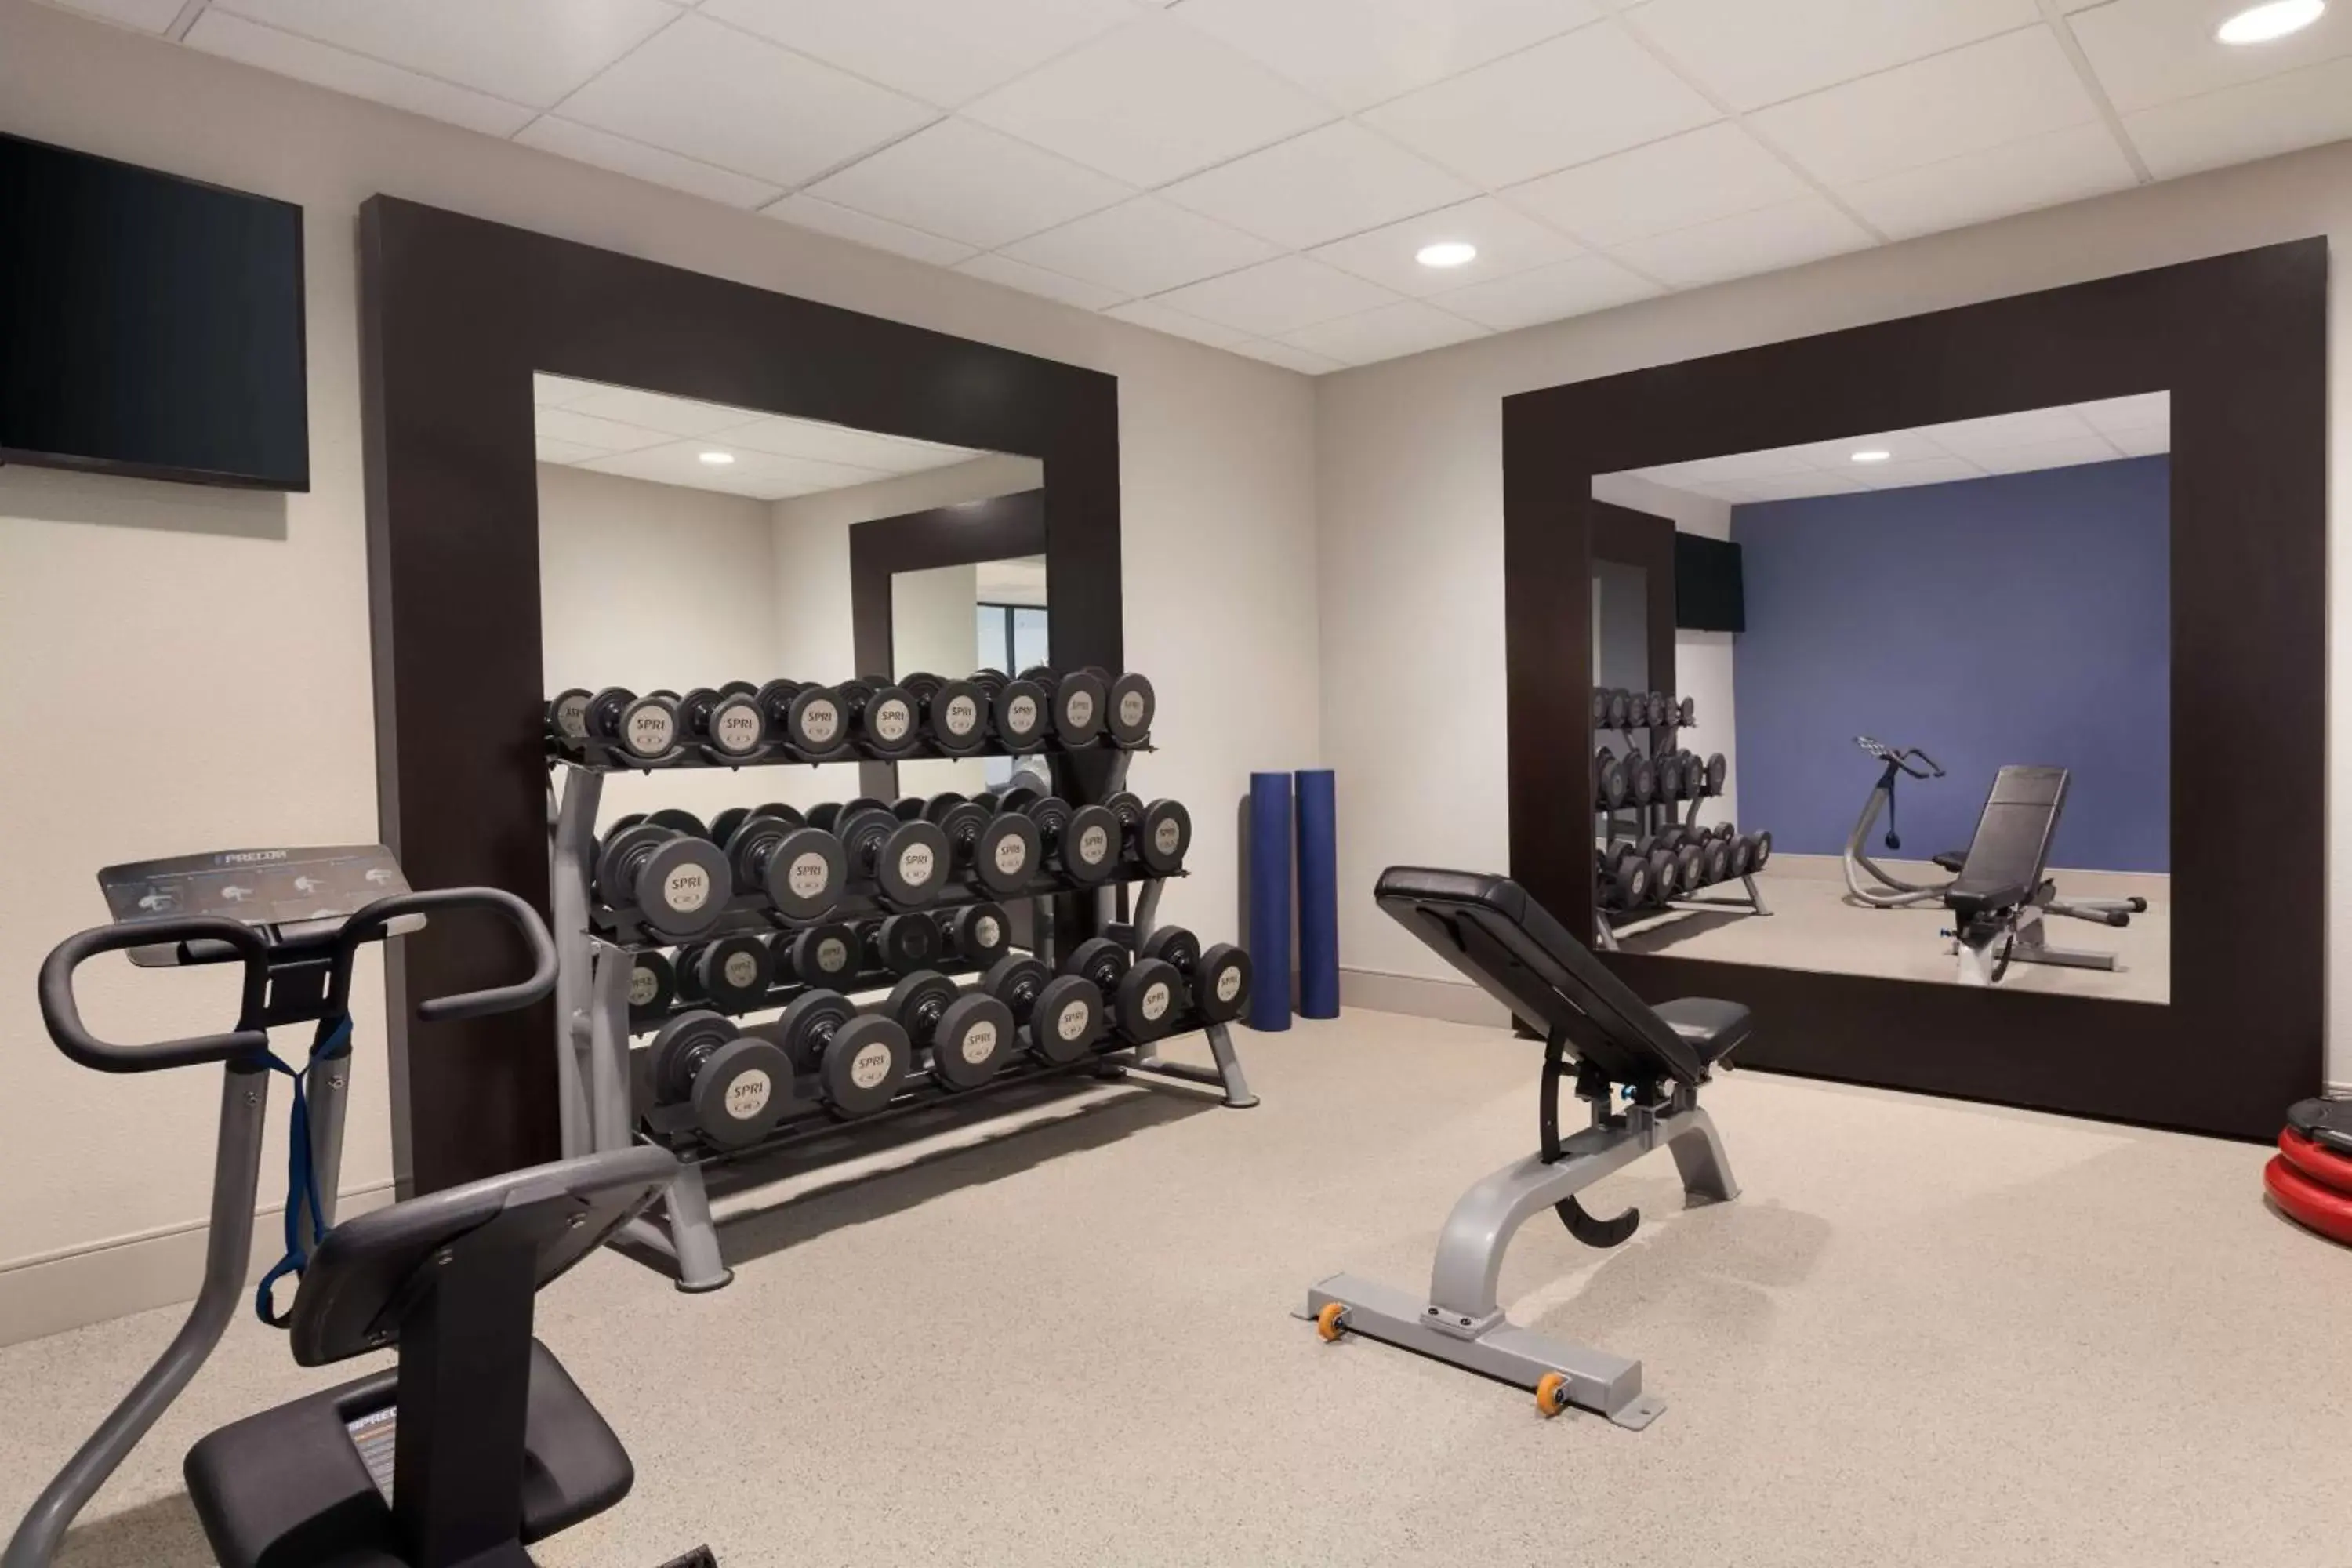 Fitness centre/facilities, Fitness Center/Facilities in Embassy Suites San Luis Obispo